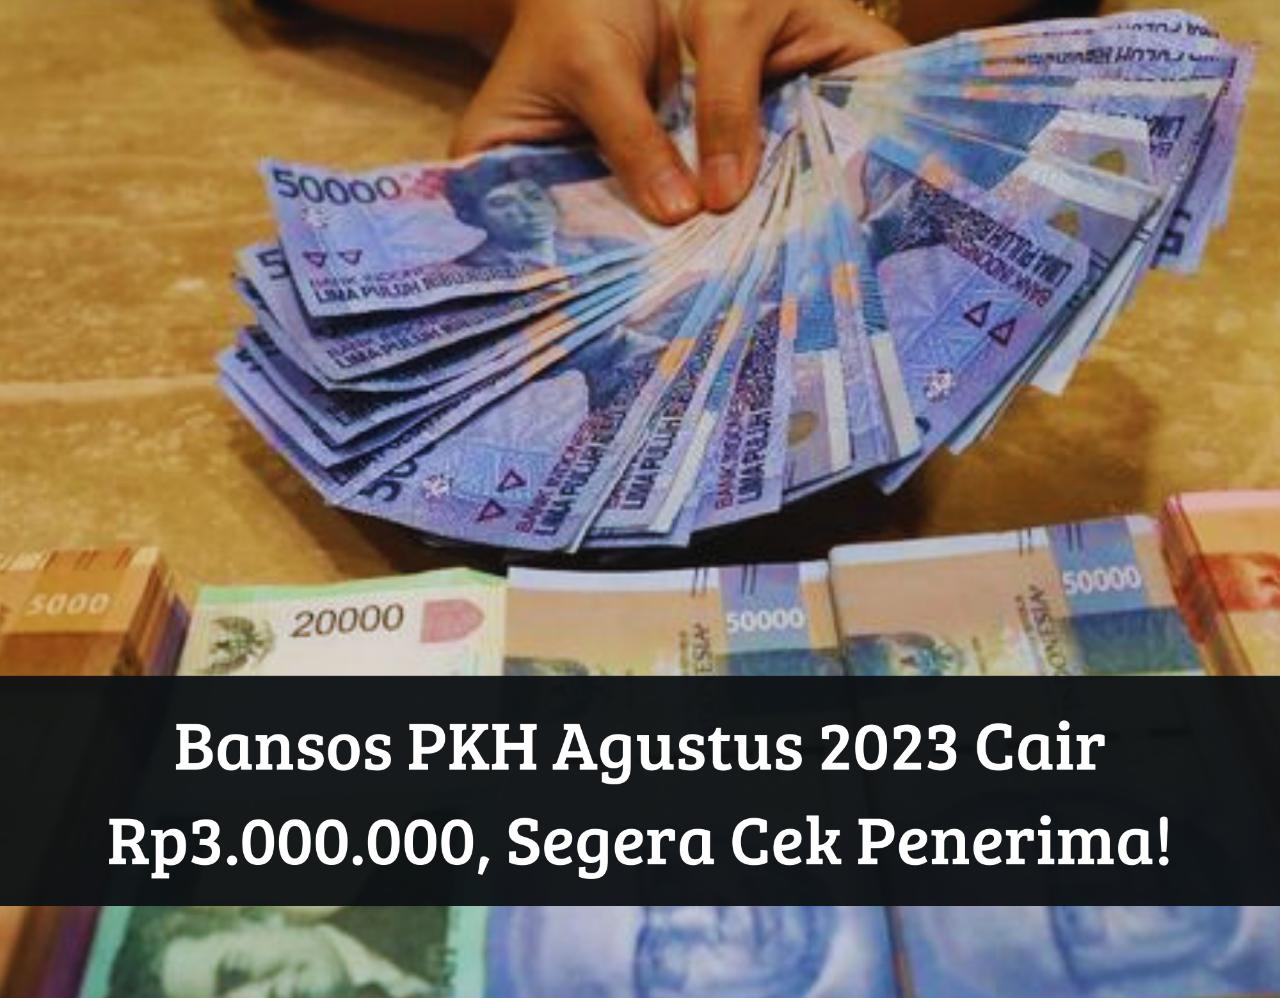 Segera Cek Penerima, Bansos PKH Agustus 2023 Cair Rp3.000.000, Login cekbansos.kemensos.go.id Pakai KTP